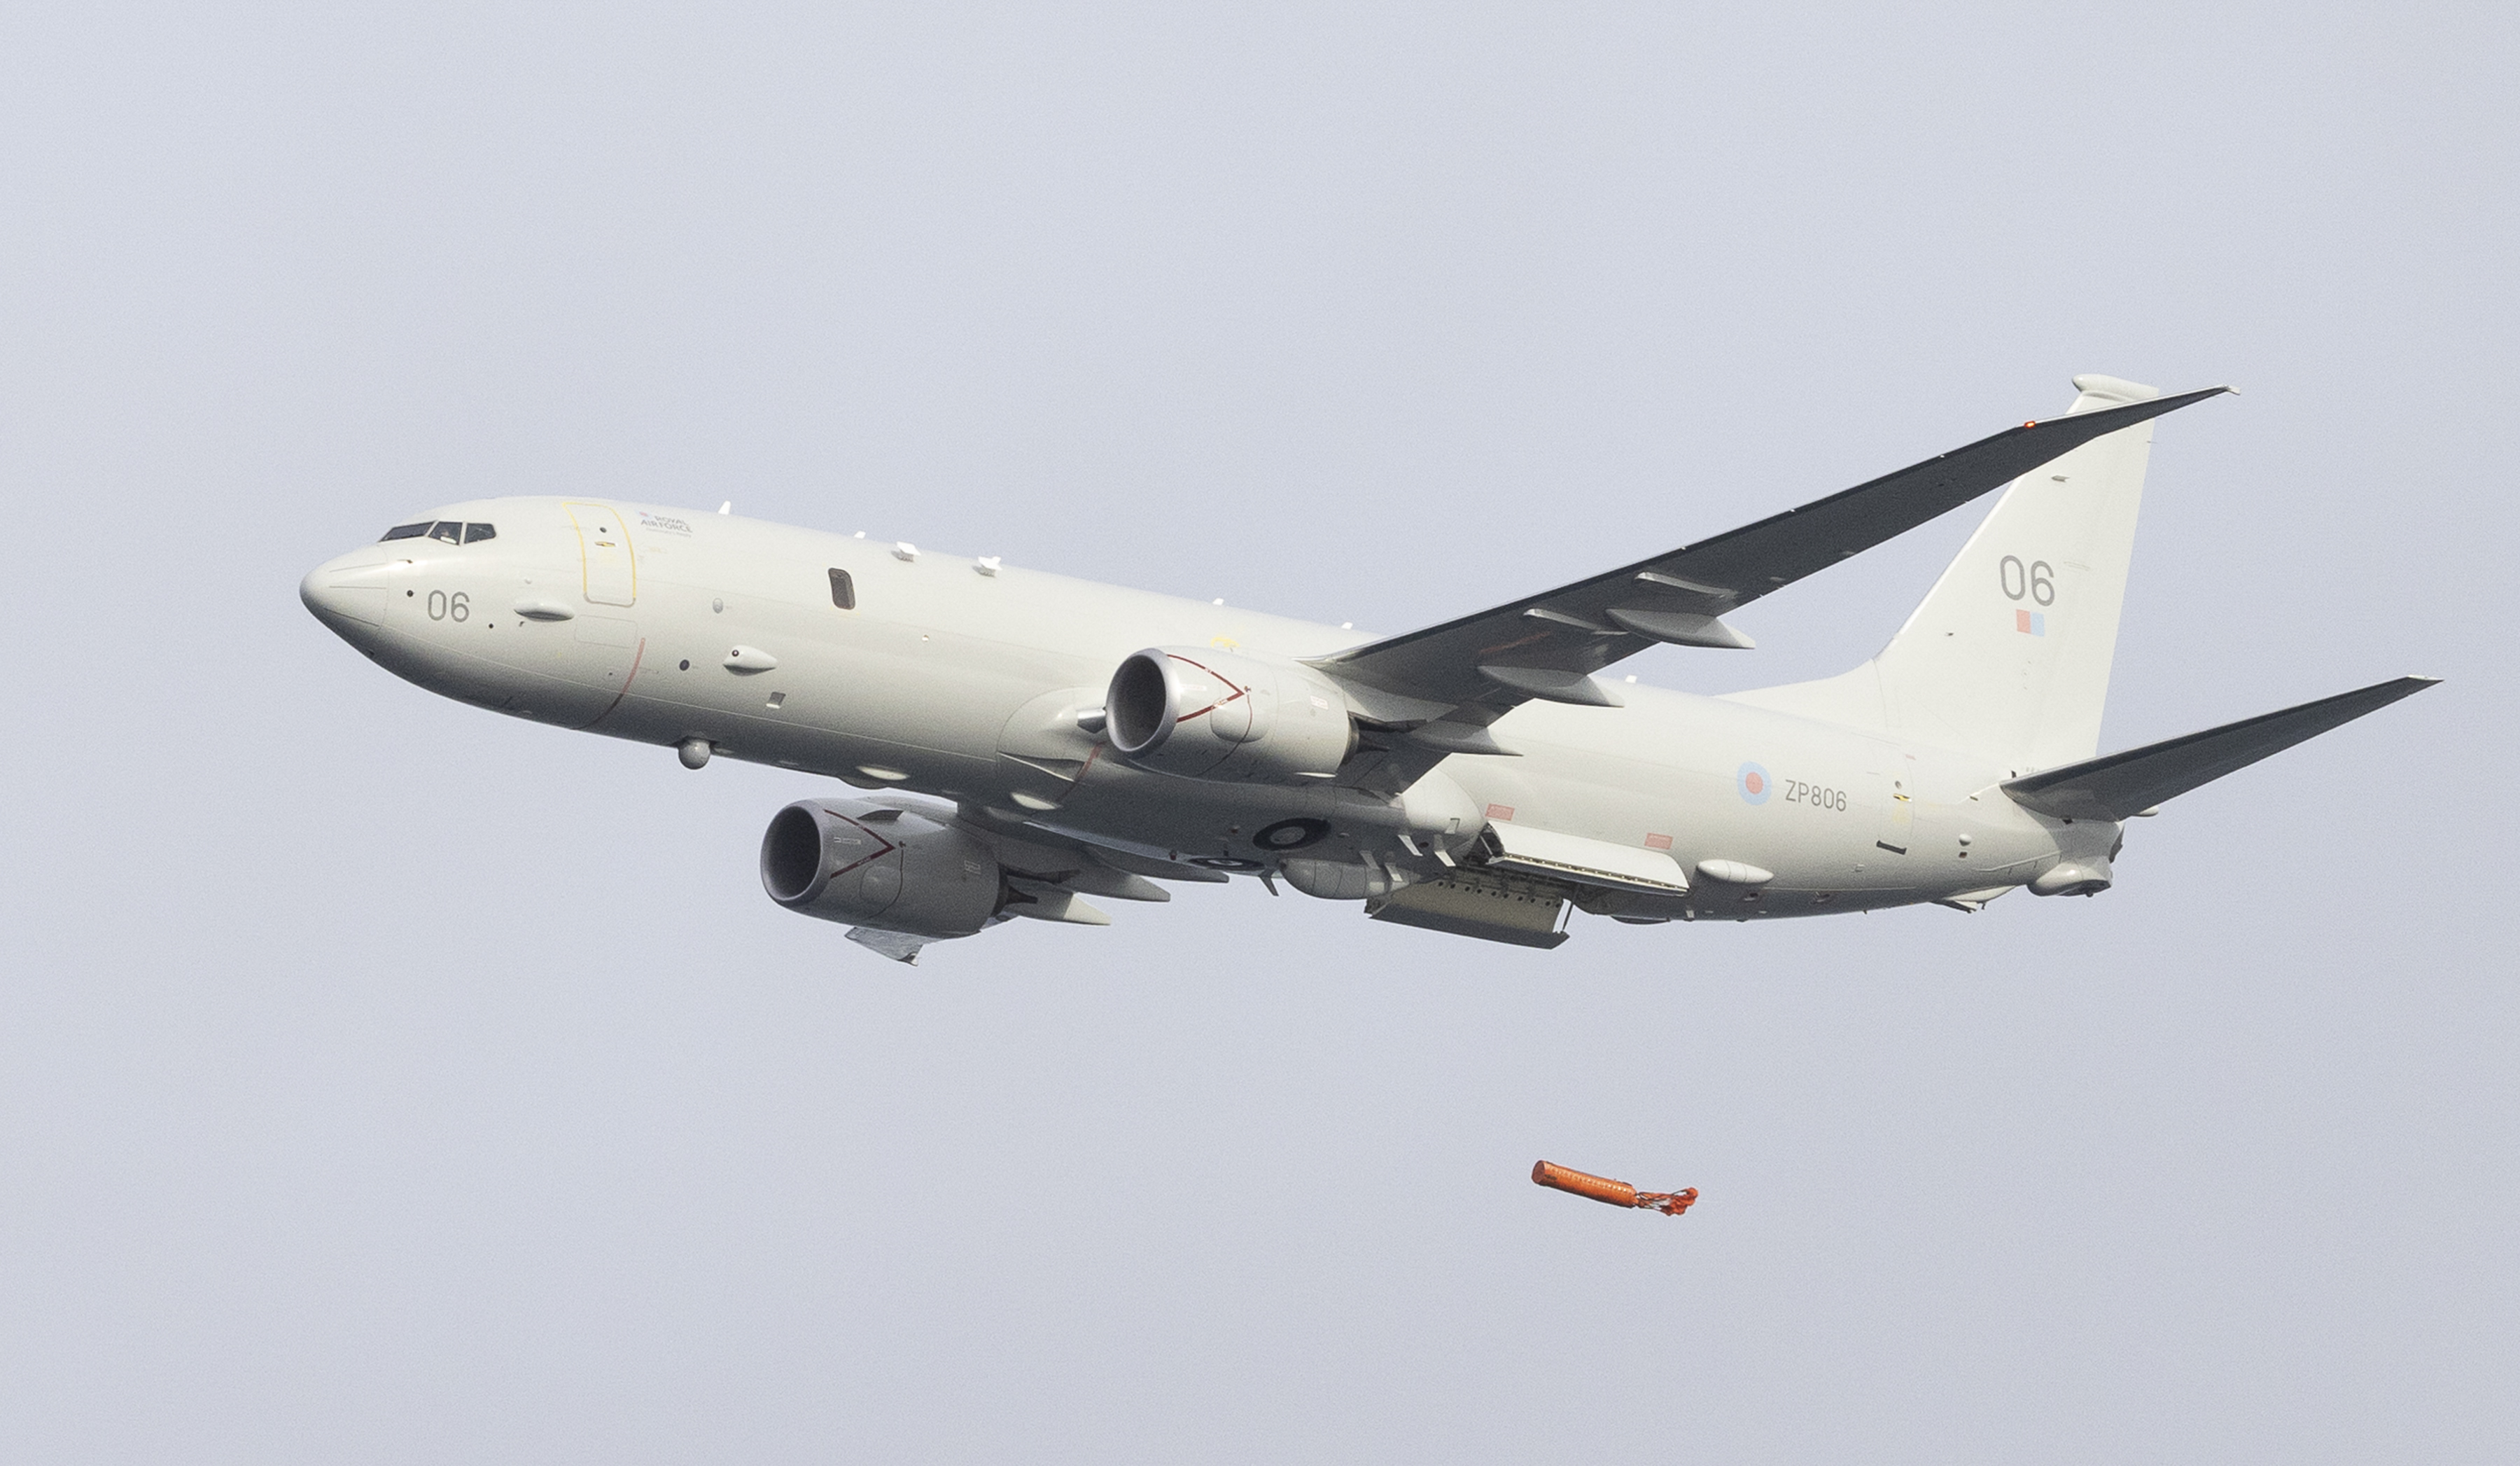 Image shows RAF Poseidon aircraft in flight deploying cargo load.